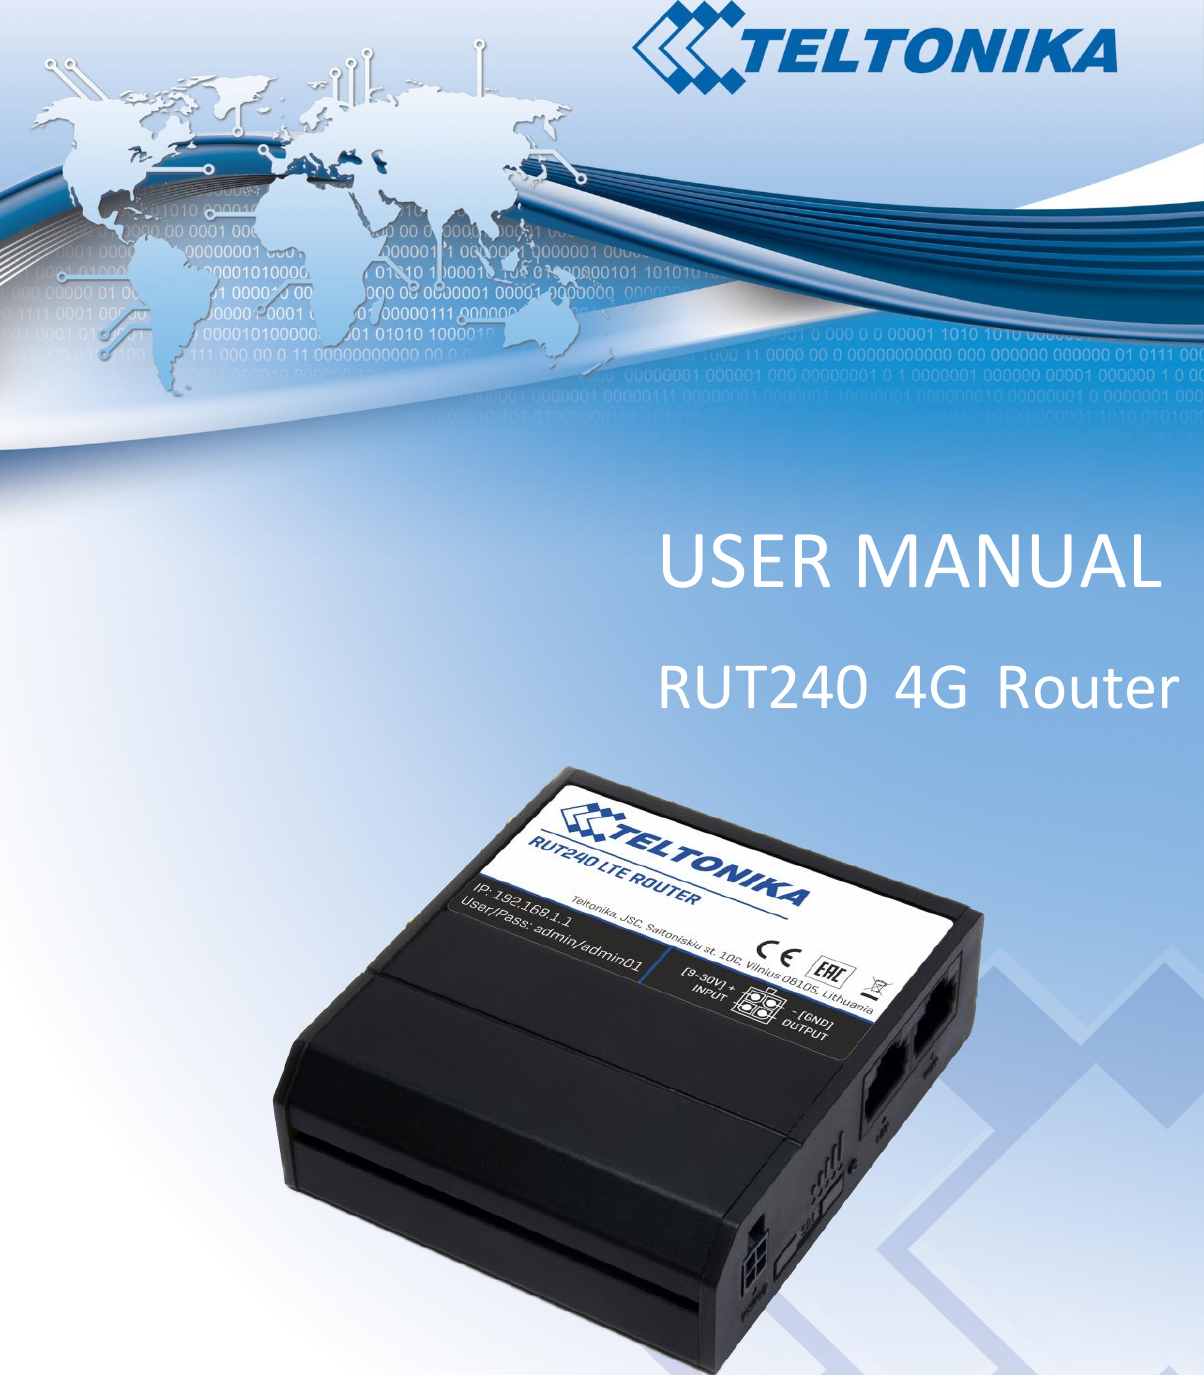                  USER MANUAL              RUT240  4G  Router  